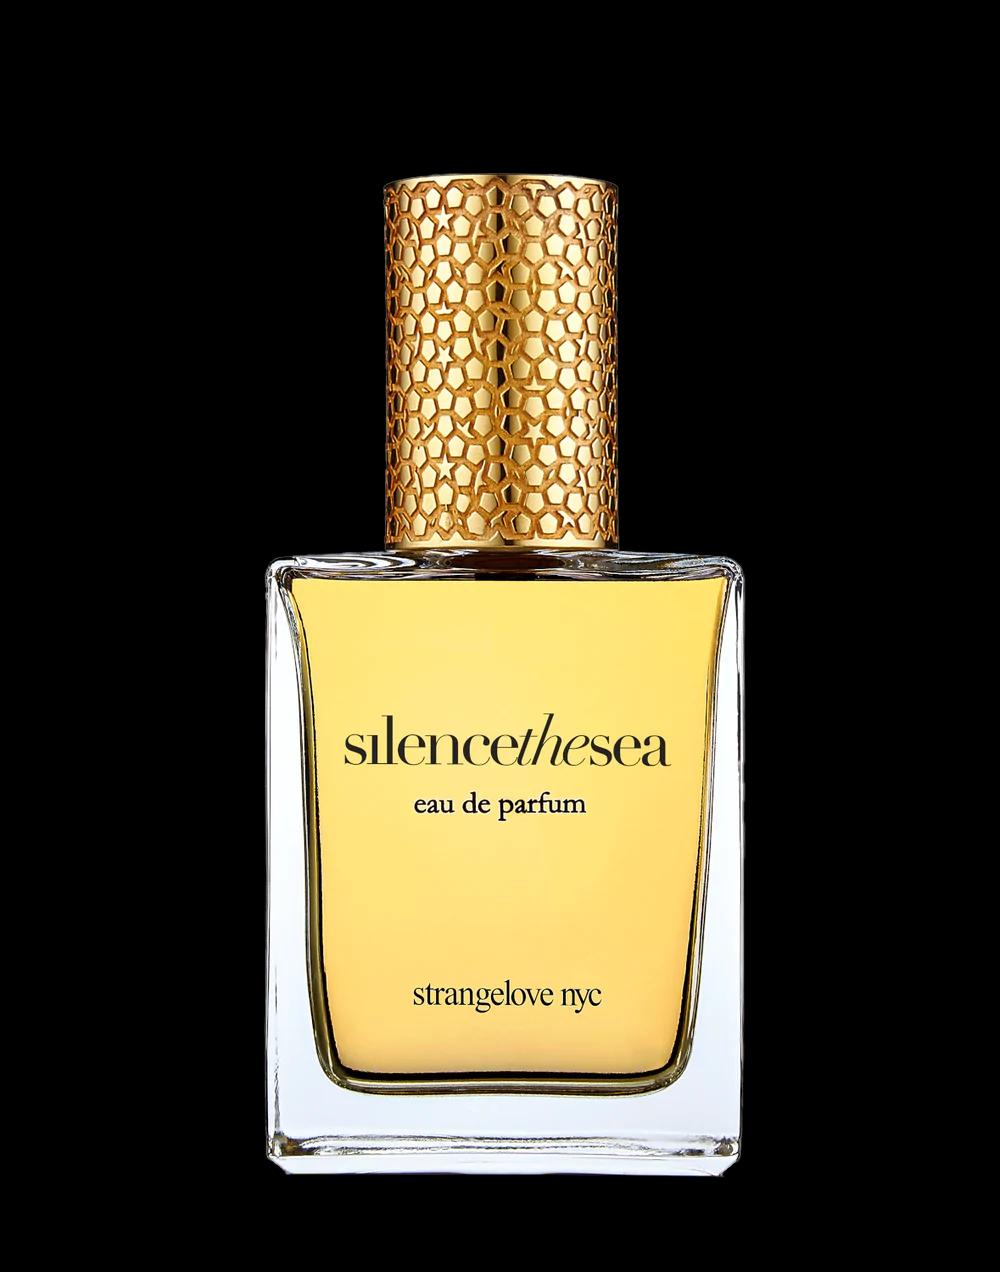 strangelove - silencethesea 50 ml | Perfume Lounge